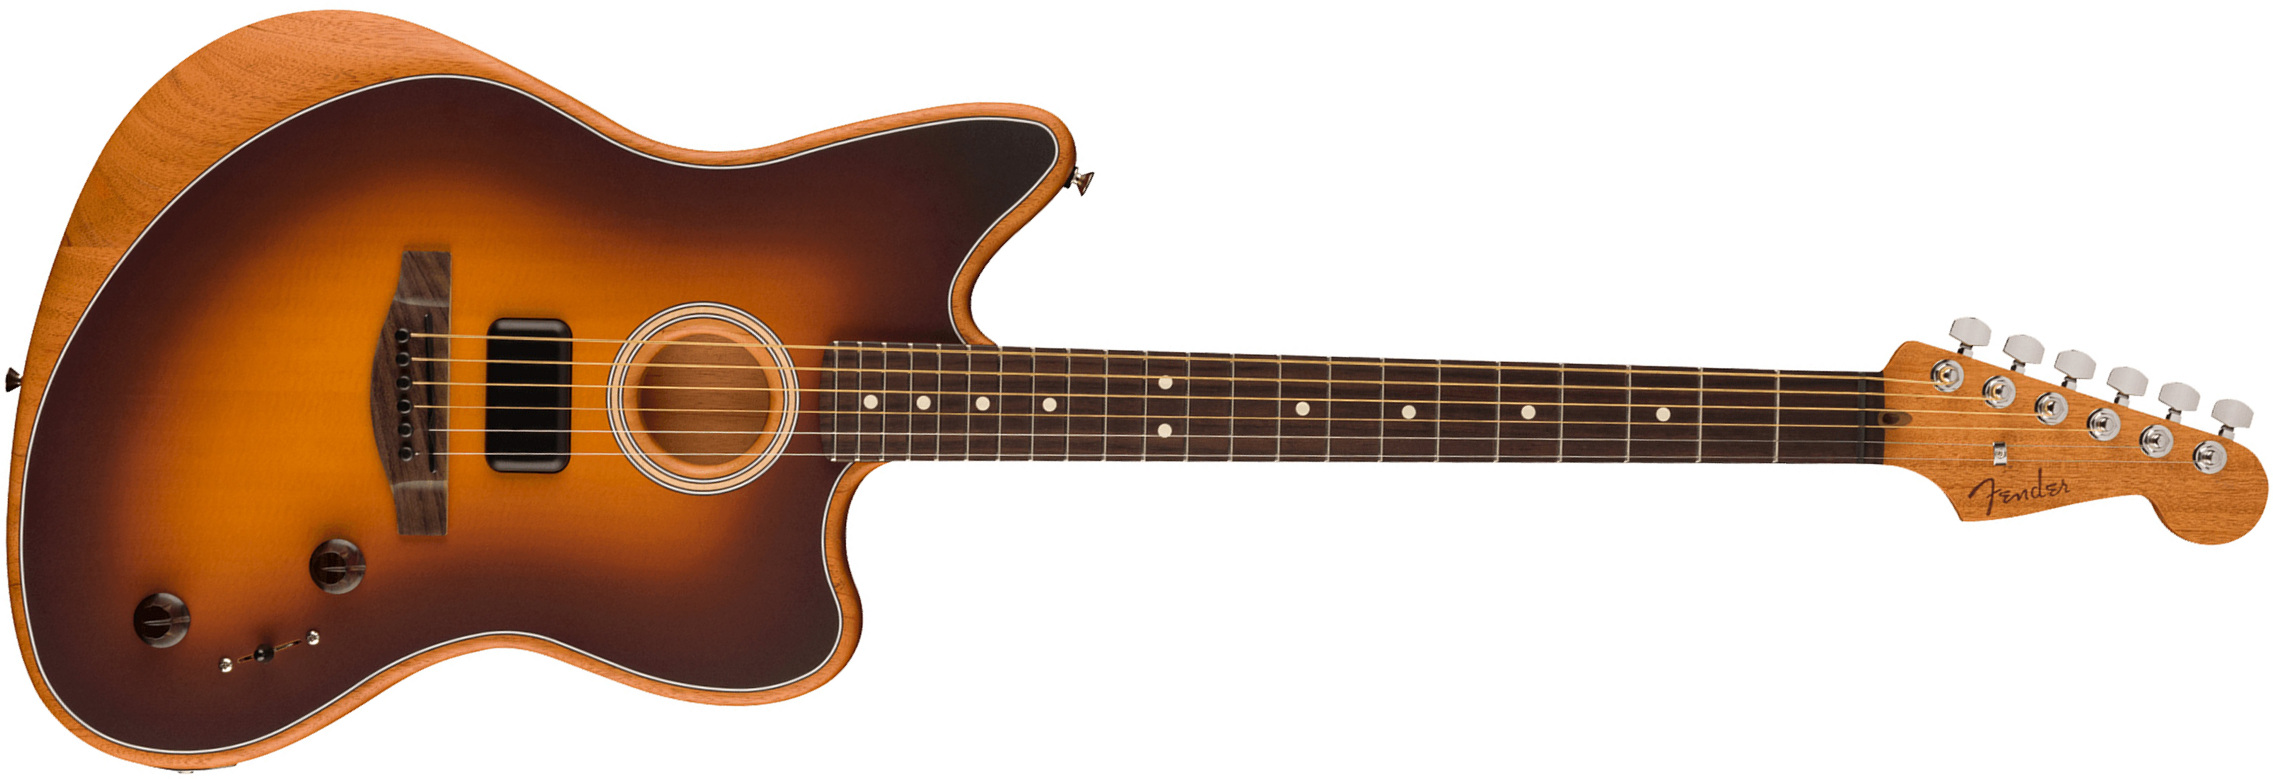 Fender Jazzmaster Acoustasonic Player Mex Epicea Acajou Rw - 2-color Sunburst - Electro acoustic guitar - Main picture